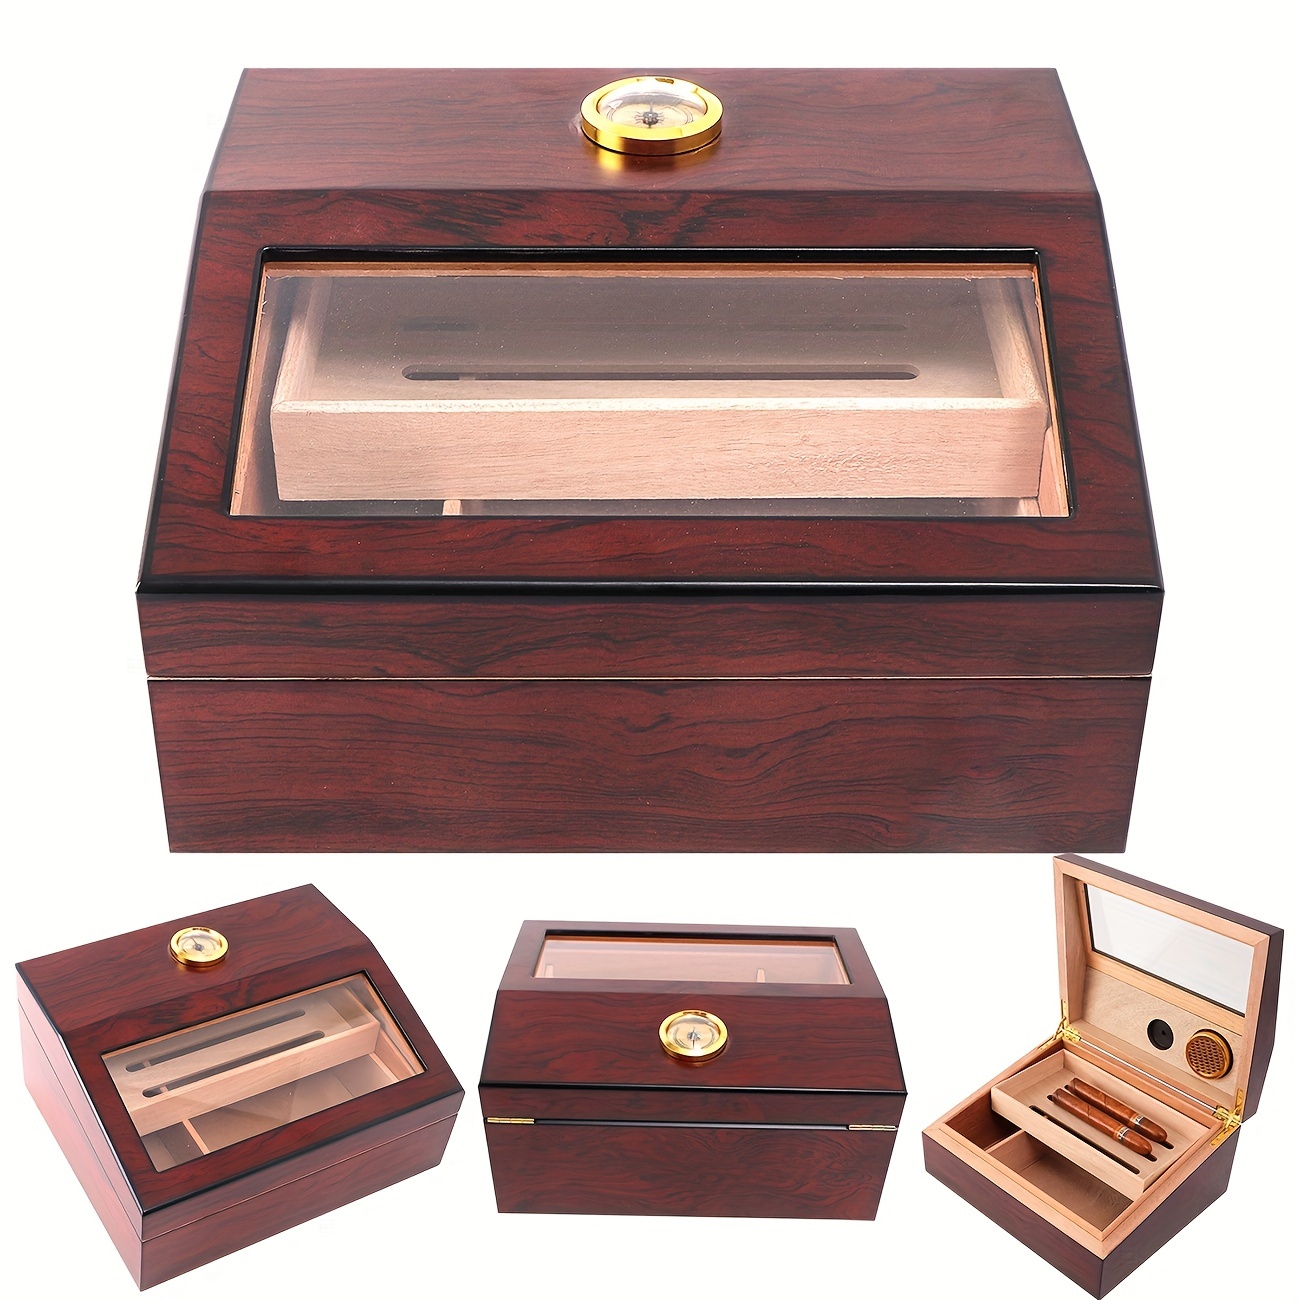 Caja de puros de madera elegante decorativa para pequeños cigarros